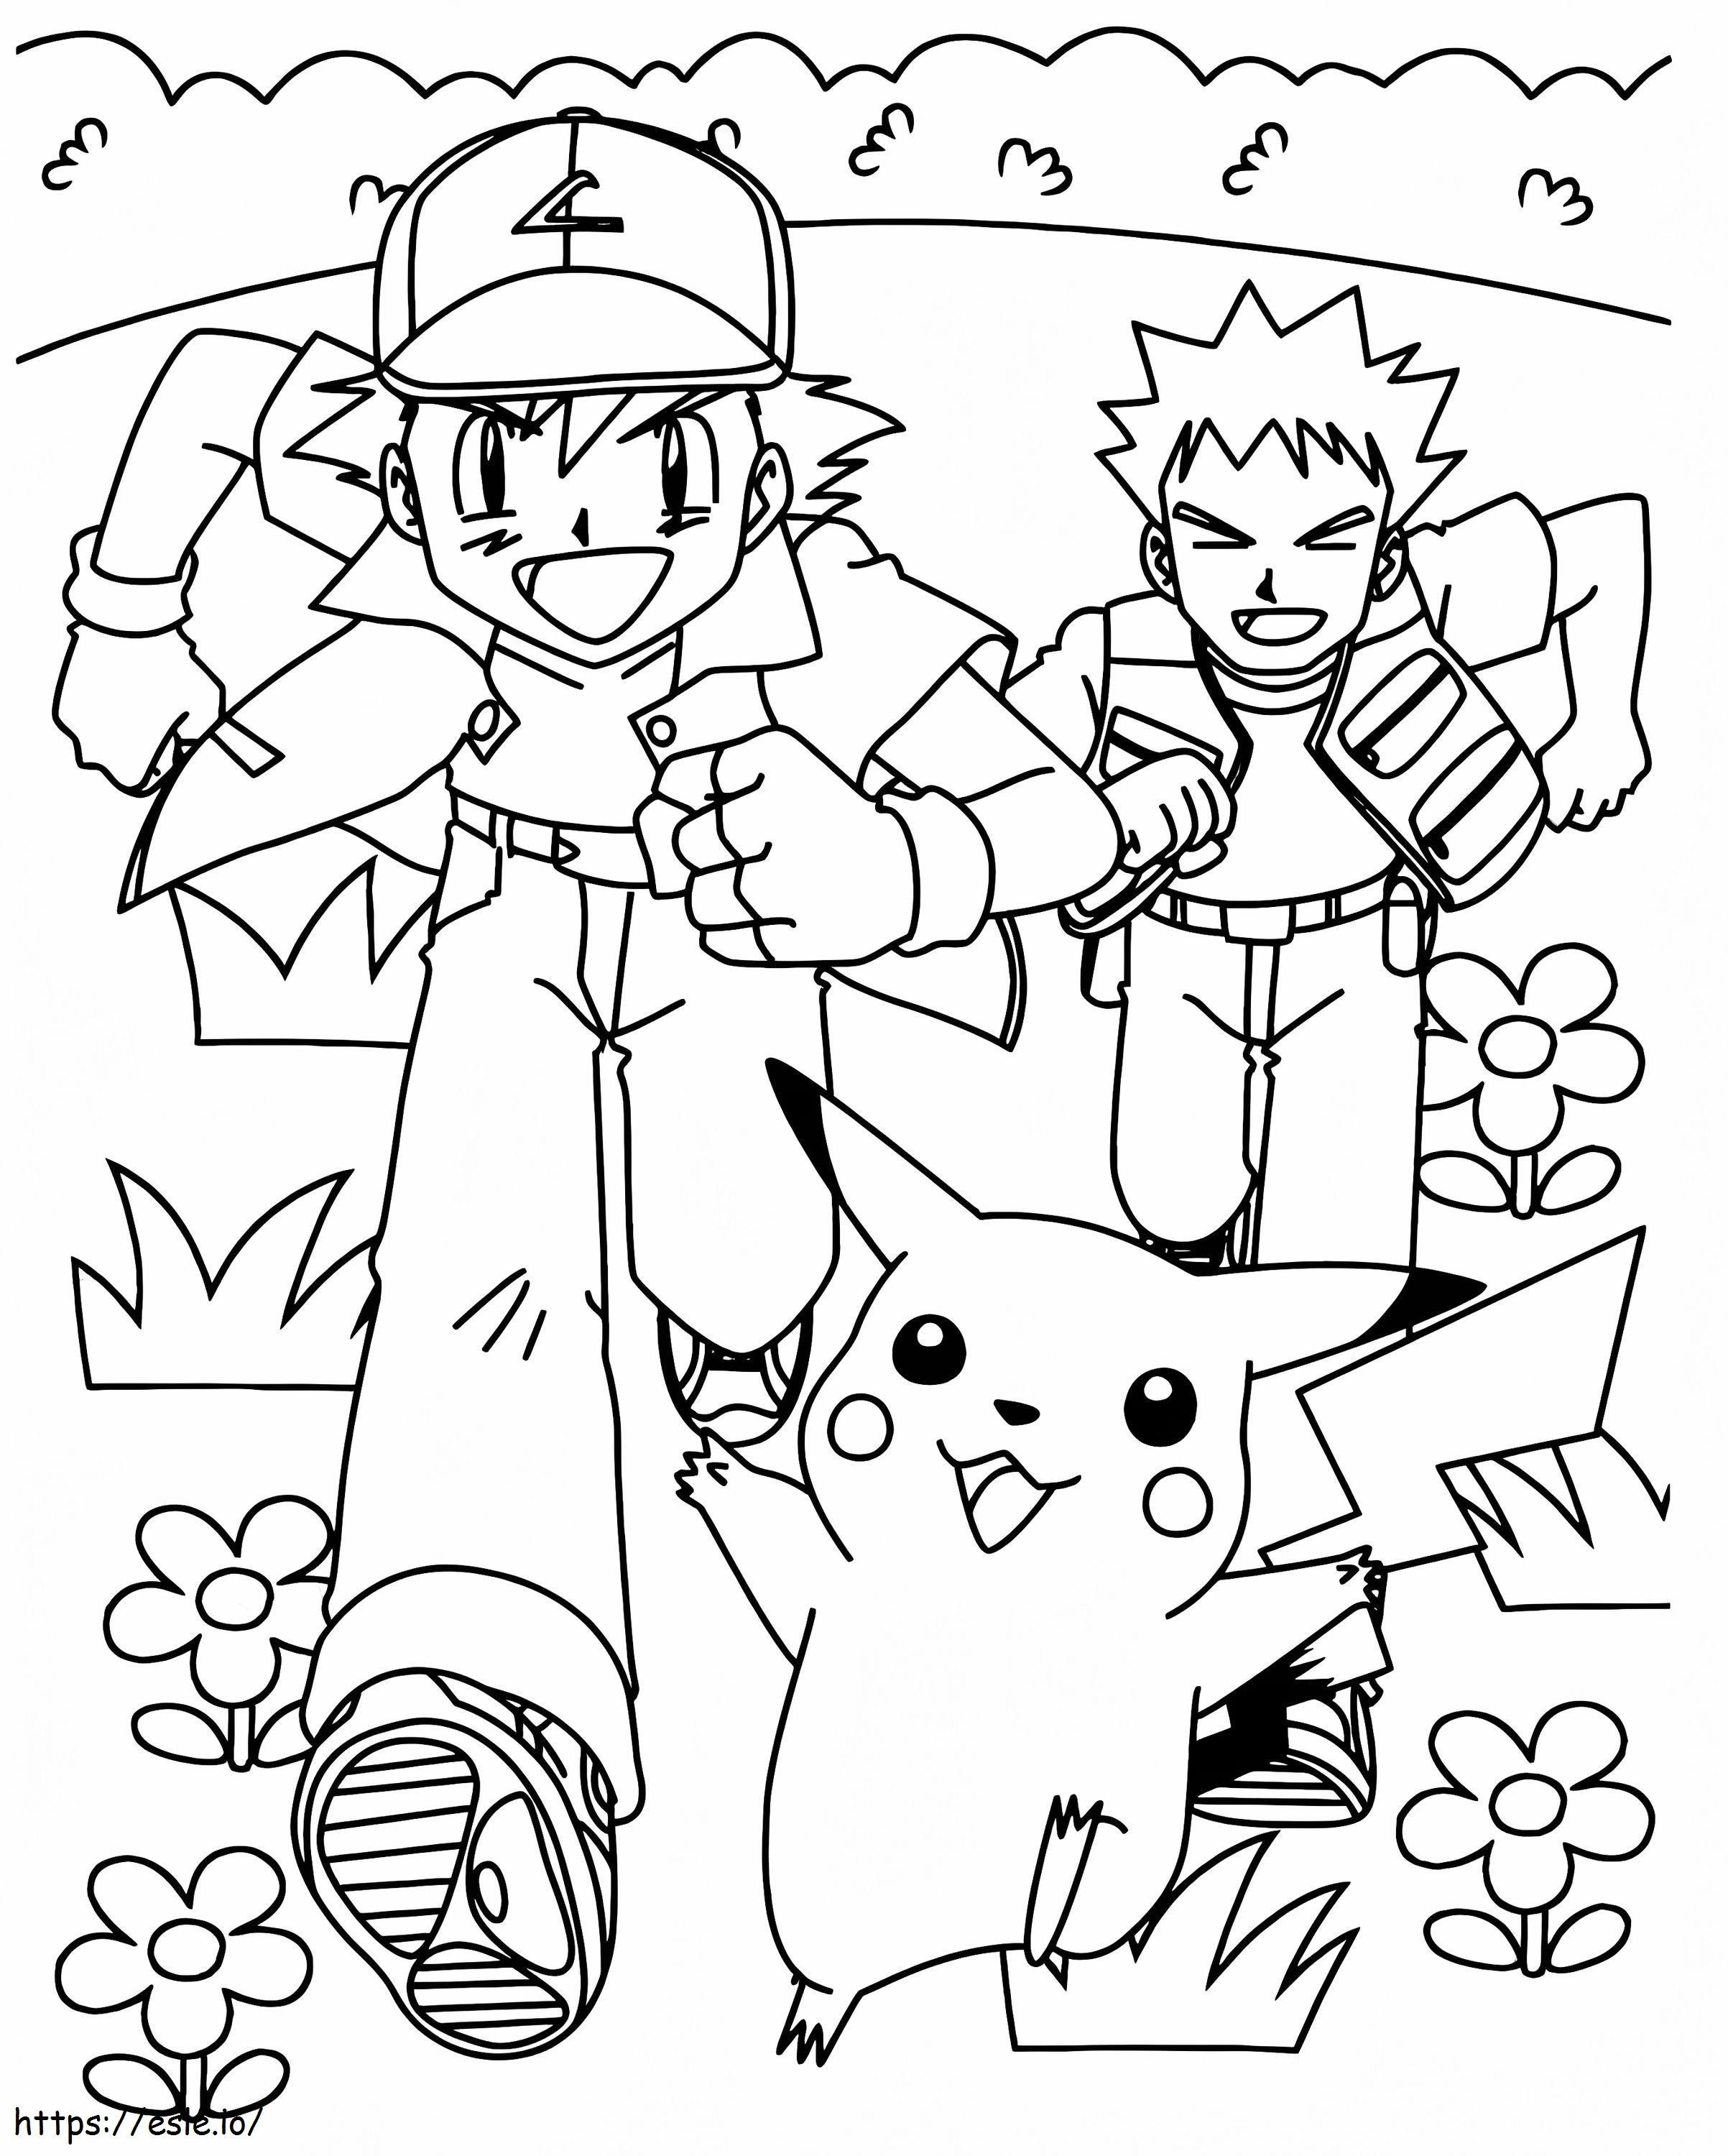 Ash Ketchum Brock And Pikachu Running coloring page